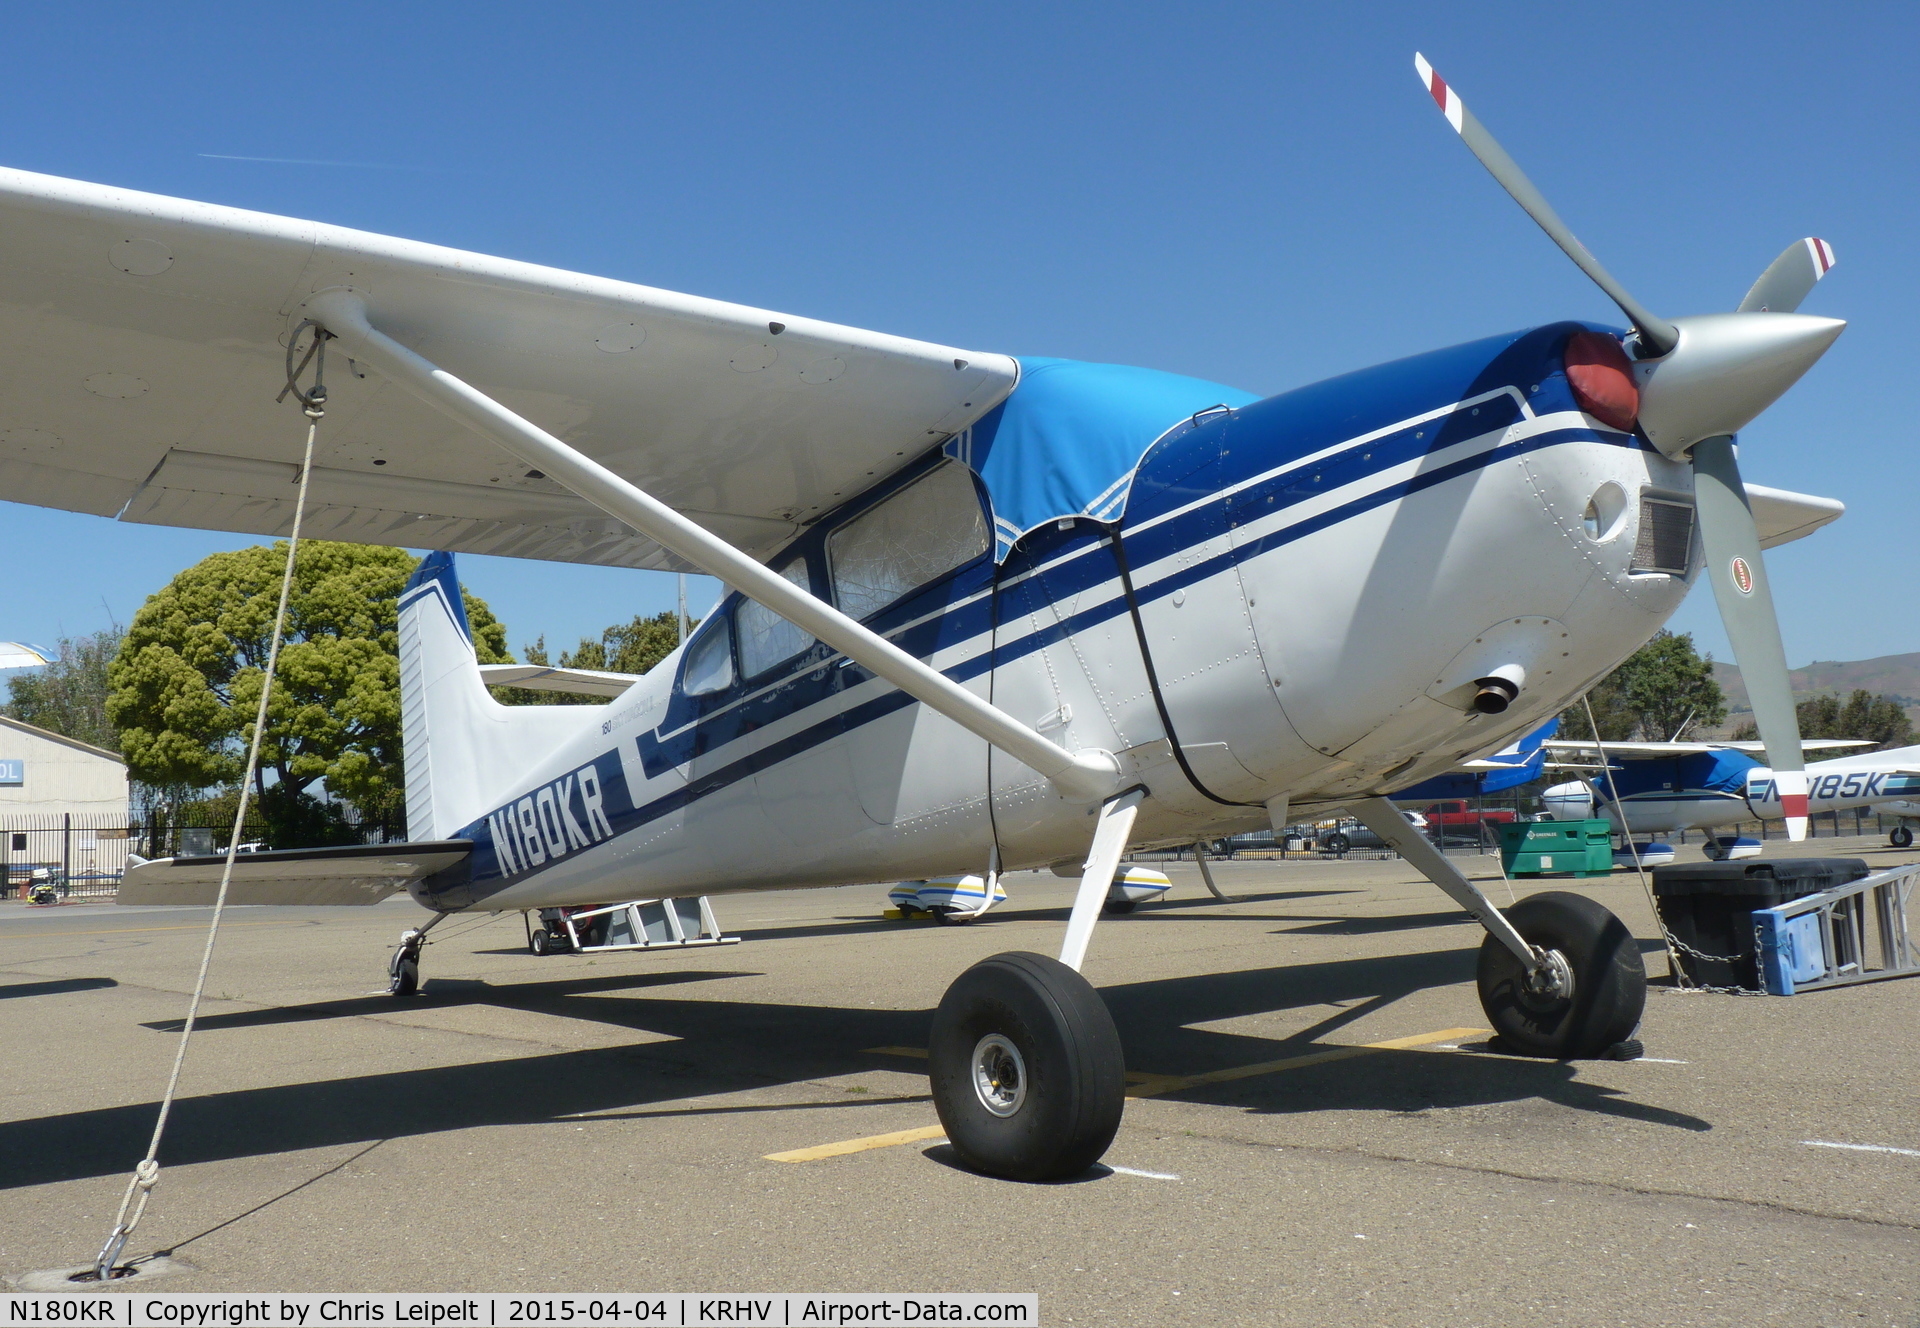 N180KR, 1980 Cessna 180K Skywagon C/N 18053147, A local 1980 Cessna 180K at its tiedown at Reid Hillview Airport, CA.